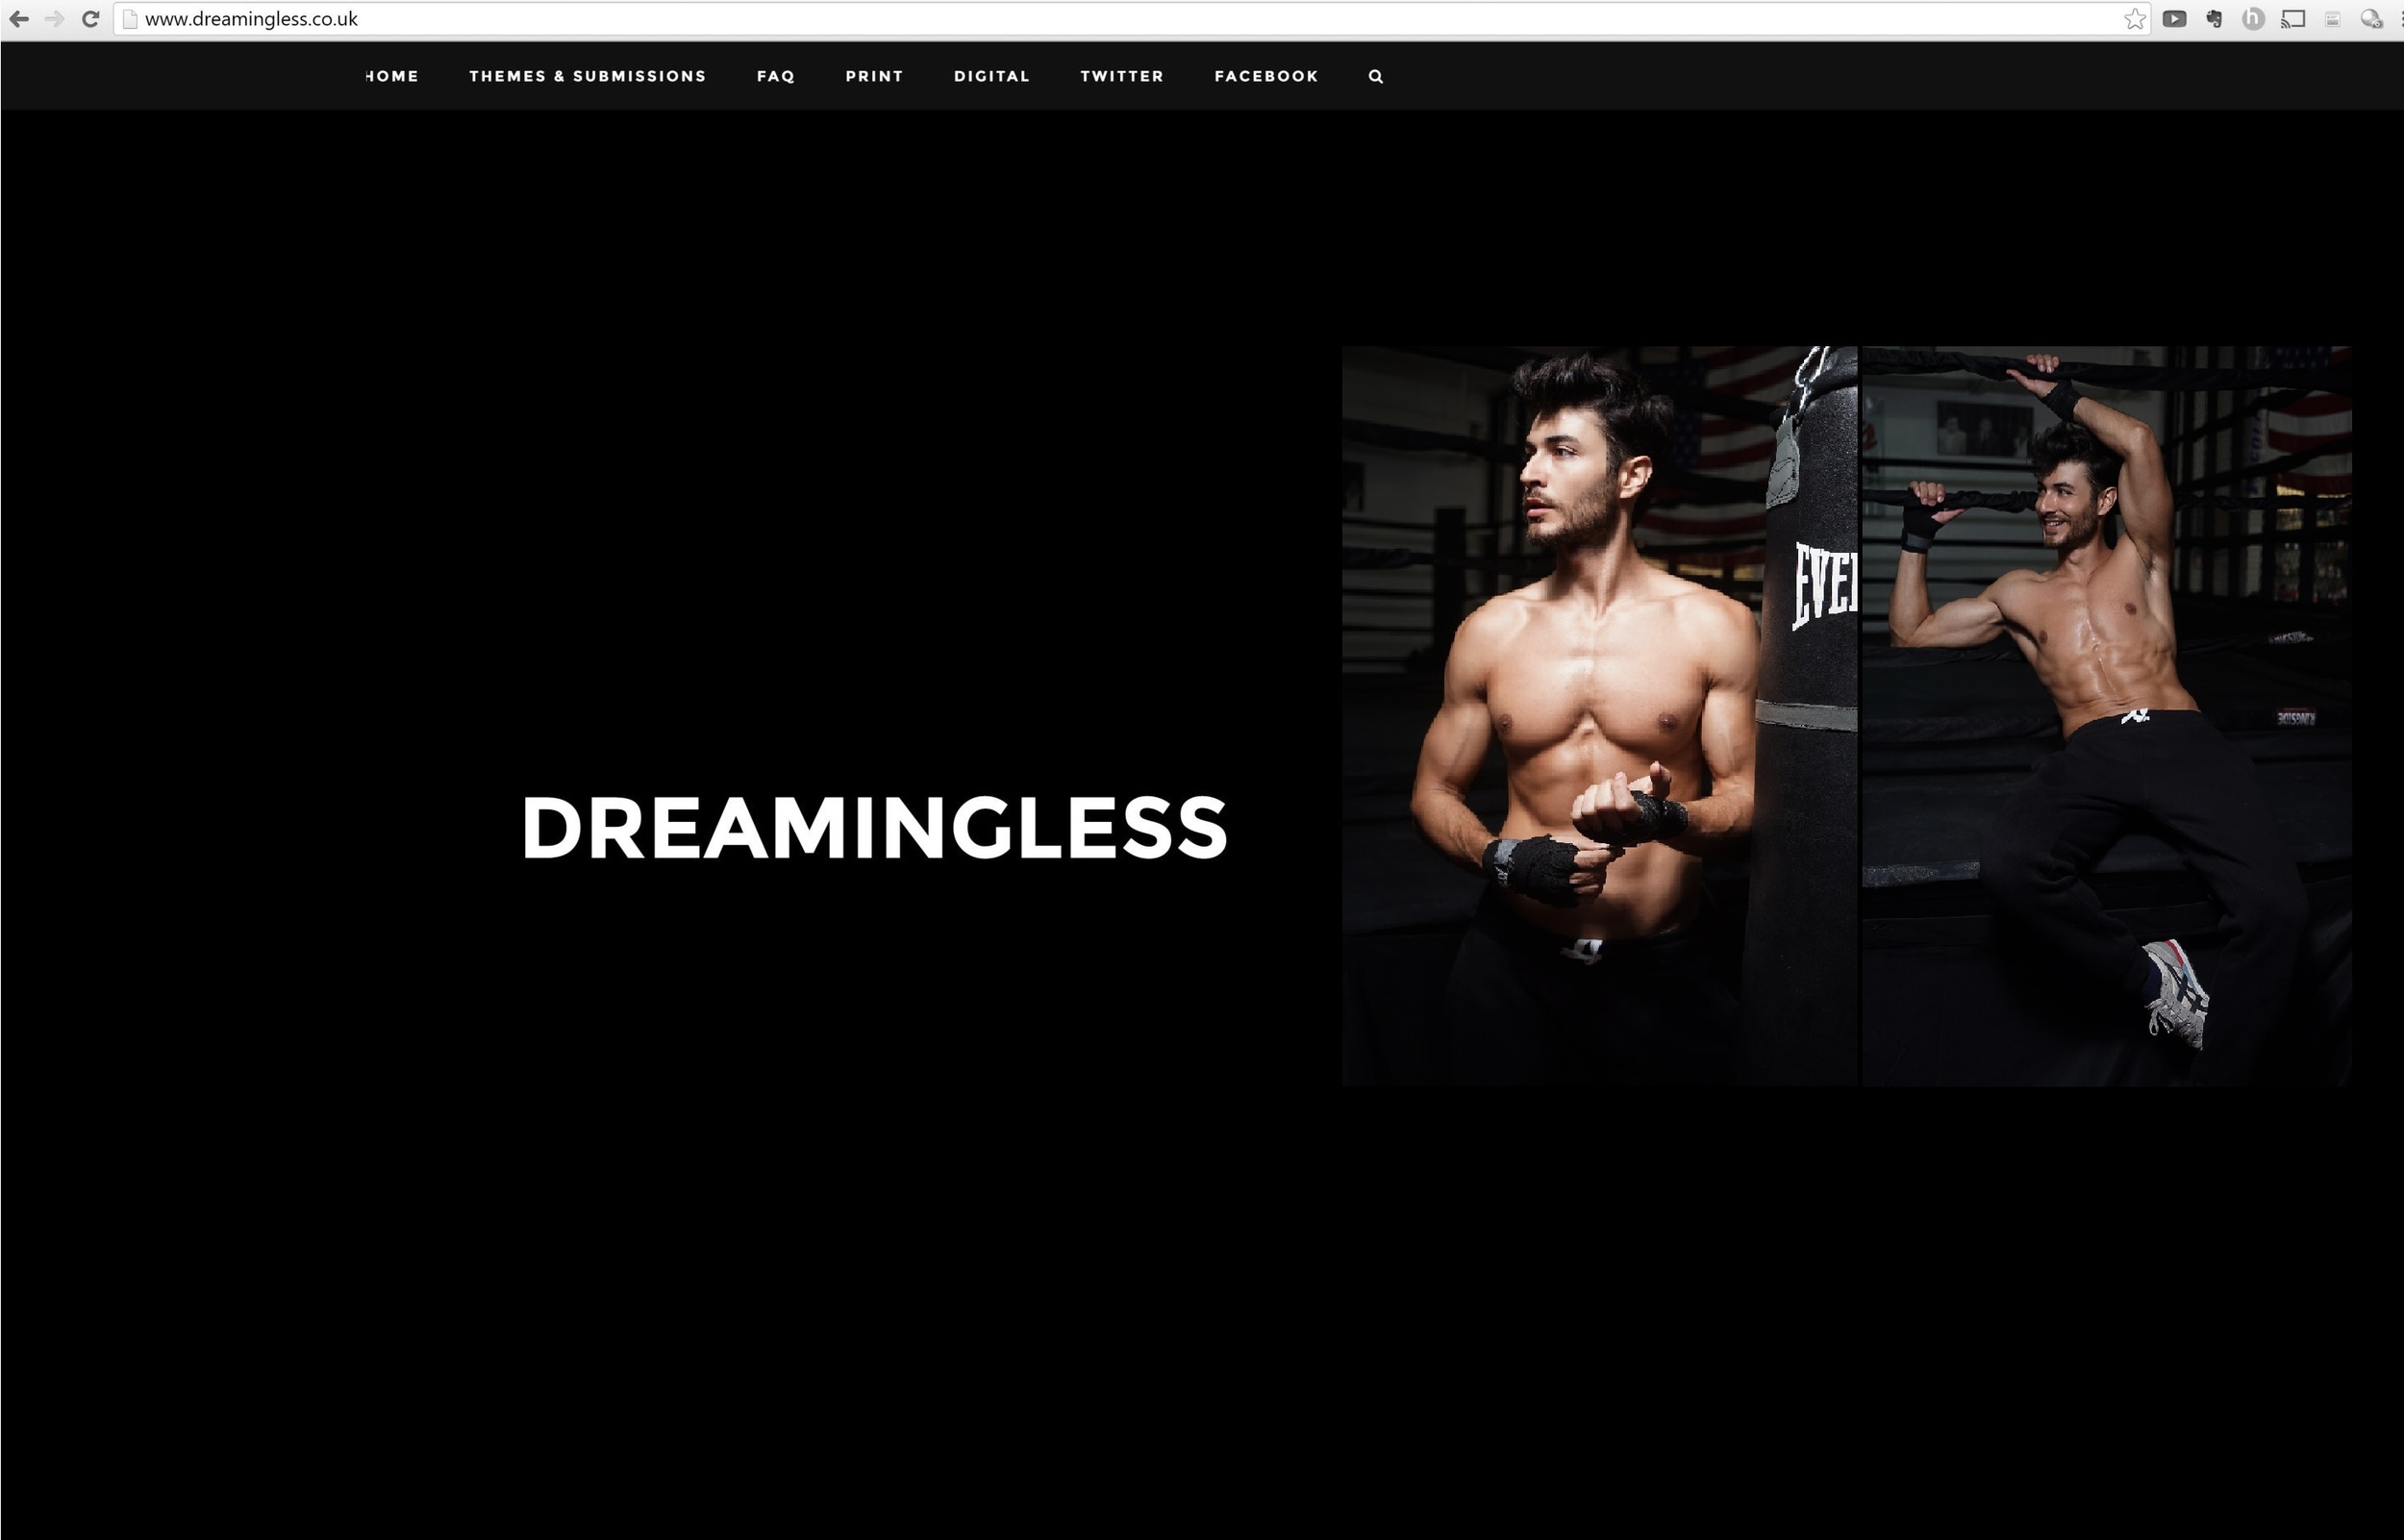 Dreamingless UK Print Website Screen Grab.JPG